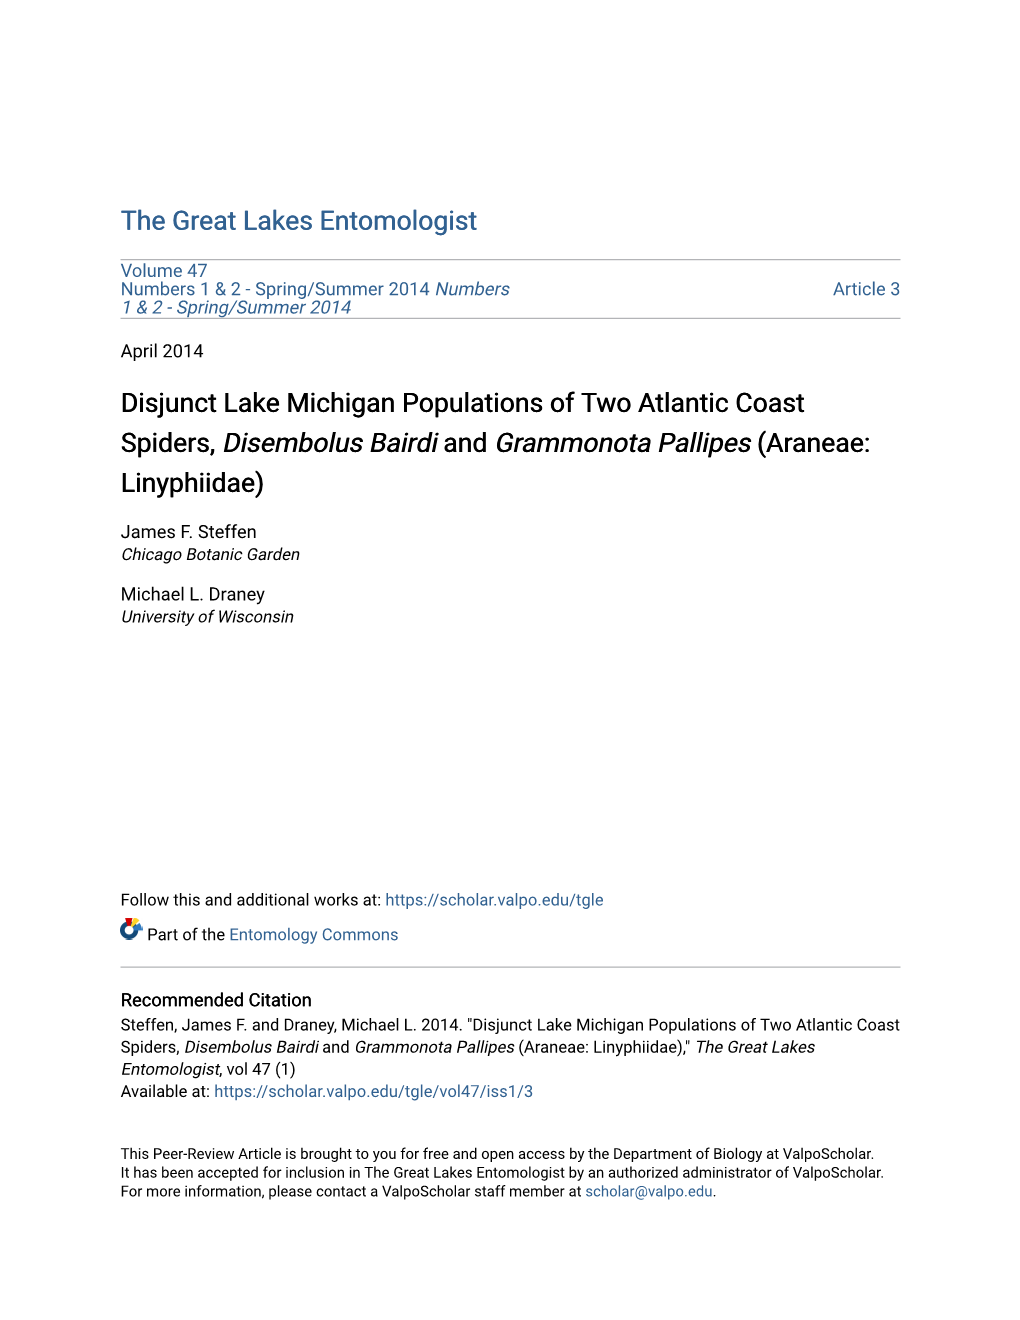 Disjunct Lake Michigan Populations of Two Atlantic Coast Spiders, Disembolus Bairdi and Grammonota Pallipes (Araneae: Linyphiidae)